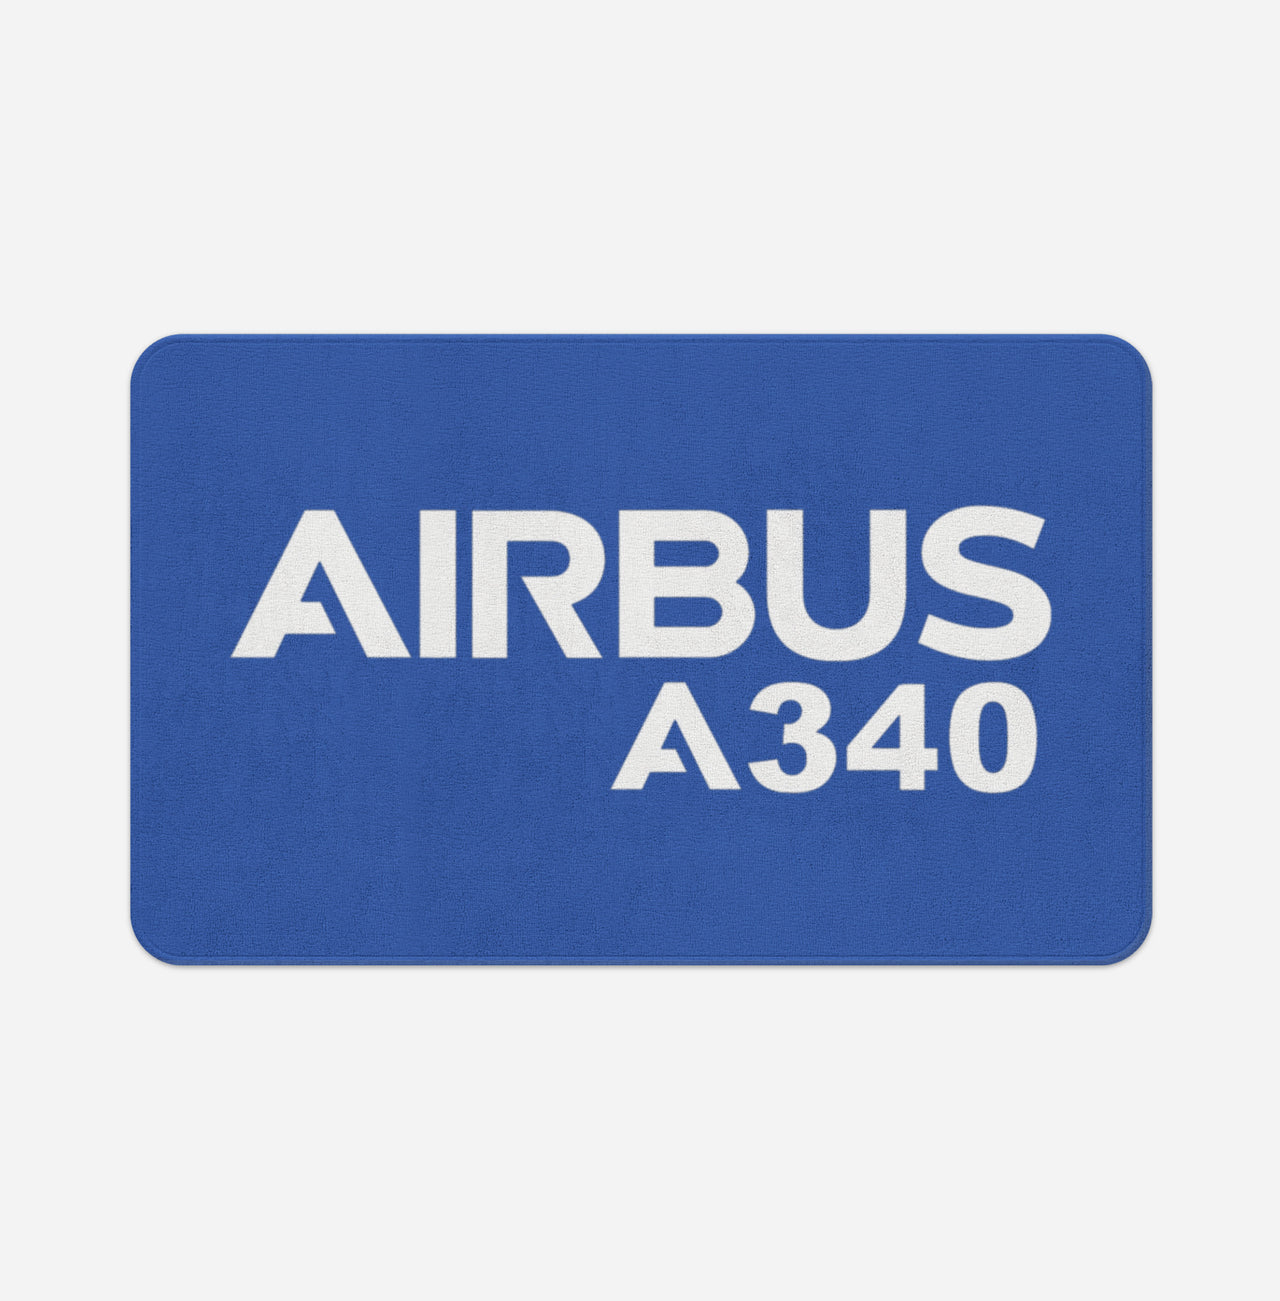 Airbus A340 & Text Designed Bath Mats